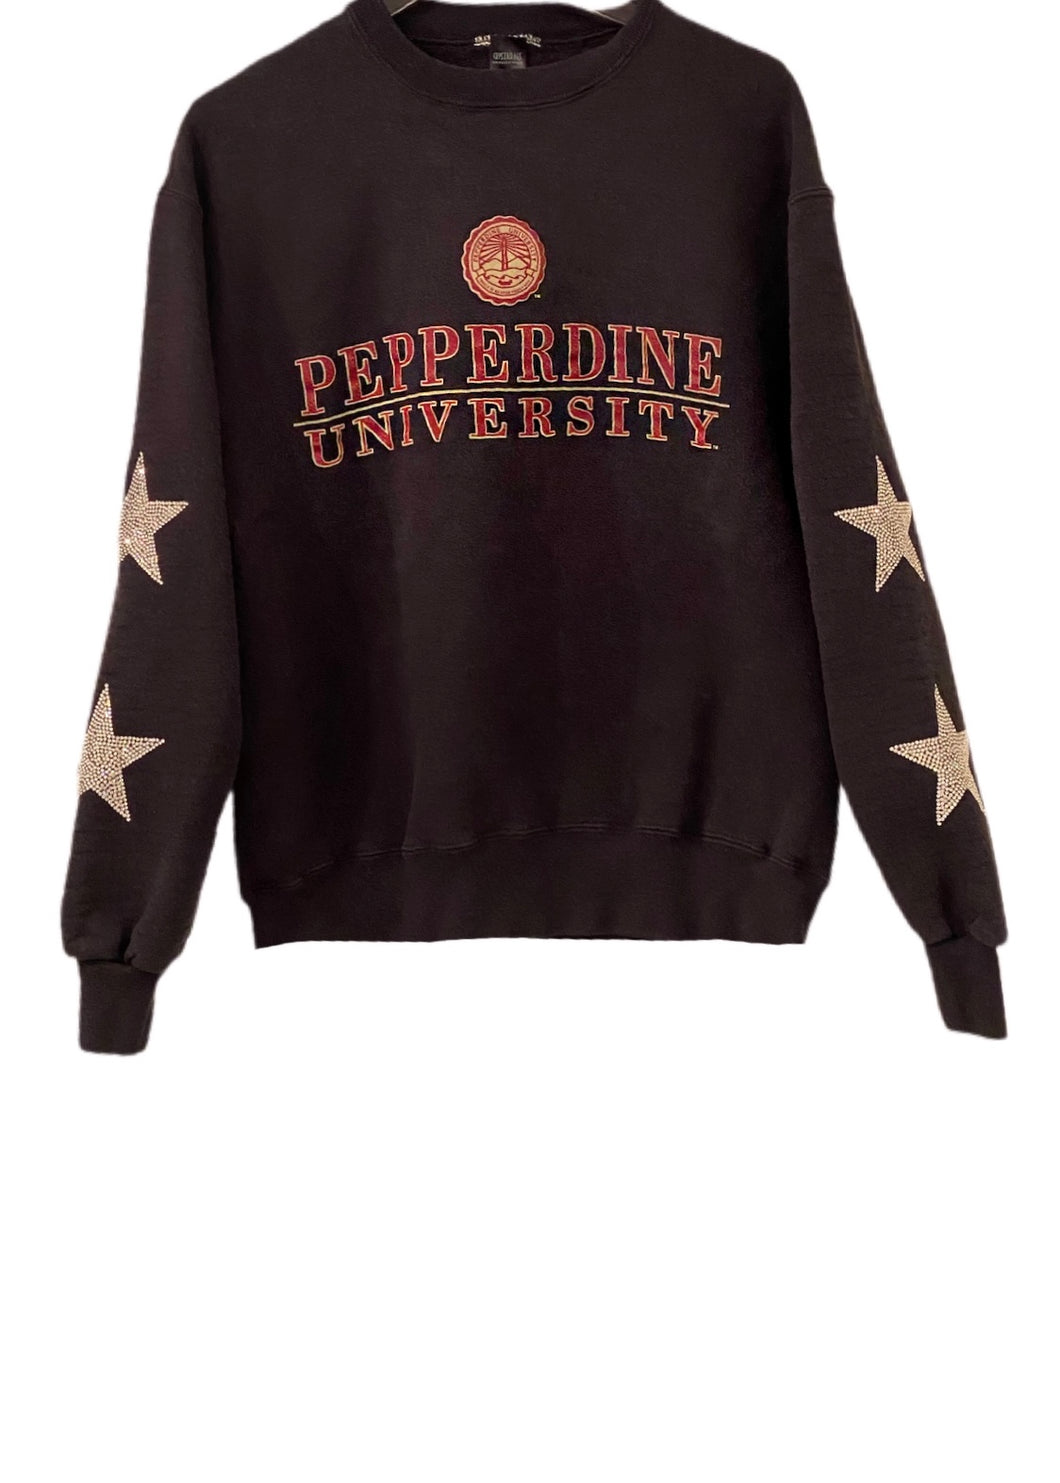 Pepperdine University, One of a KIND Vintage Sweatshirt with Crystal Star Design